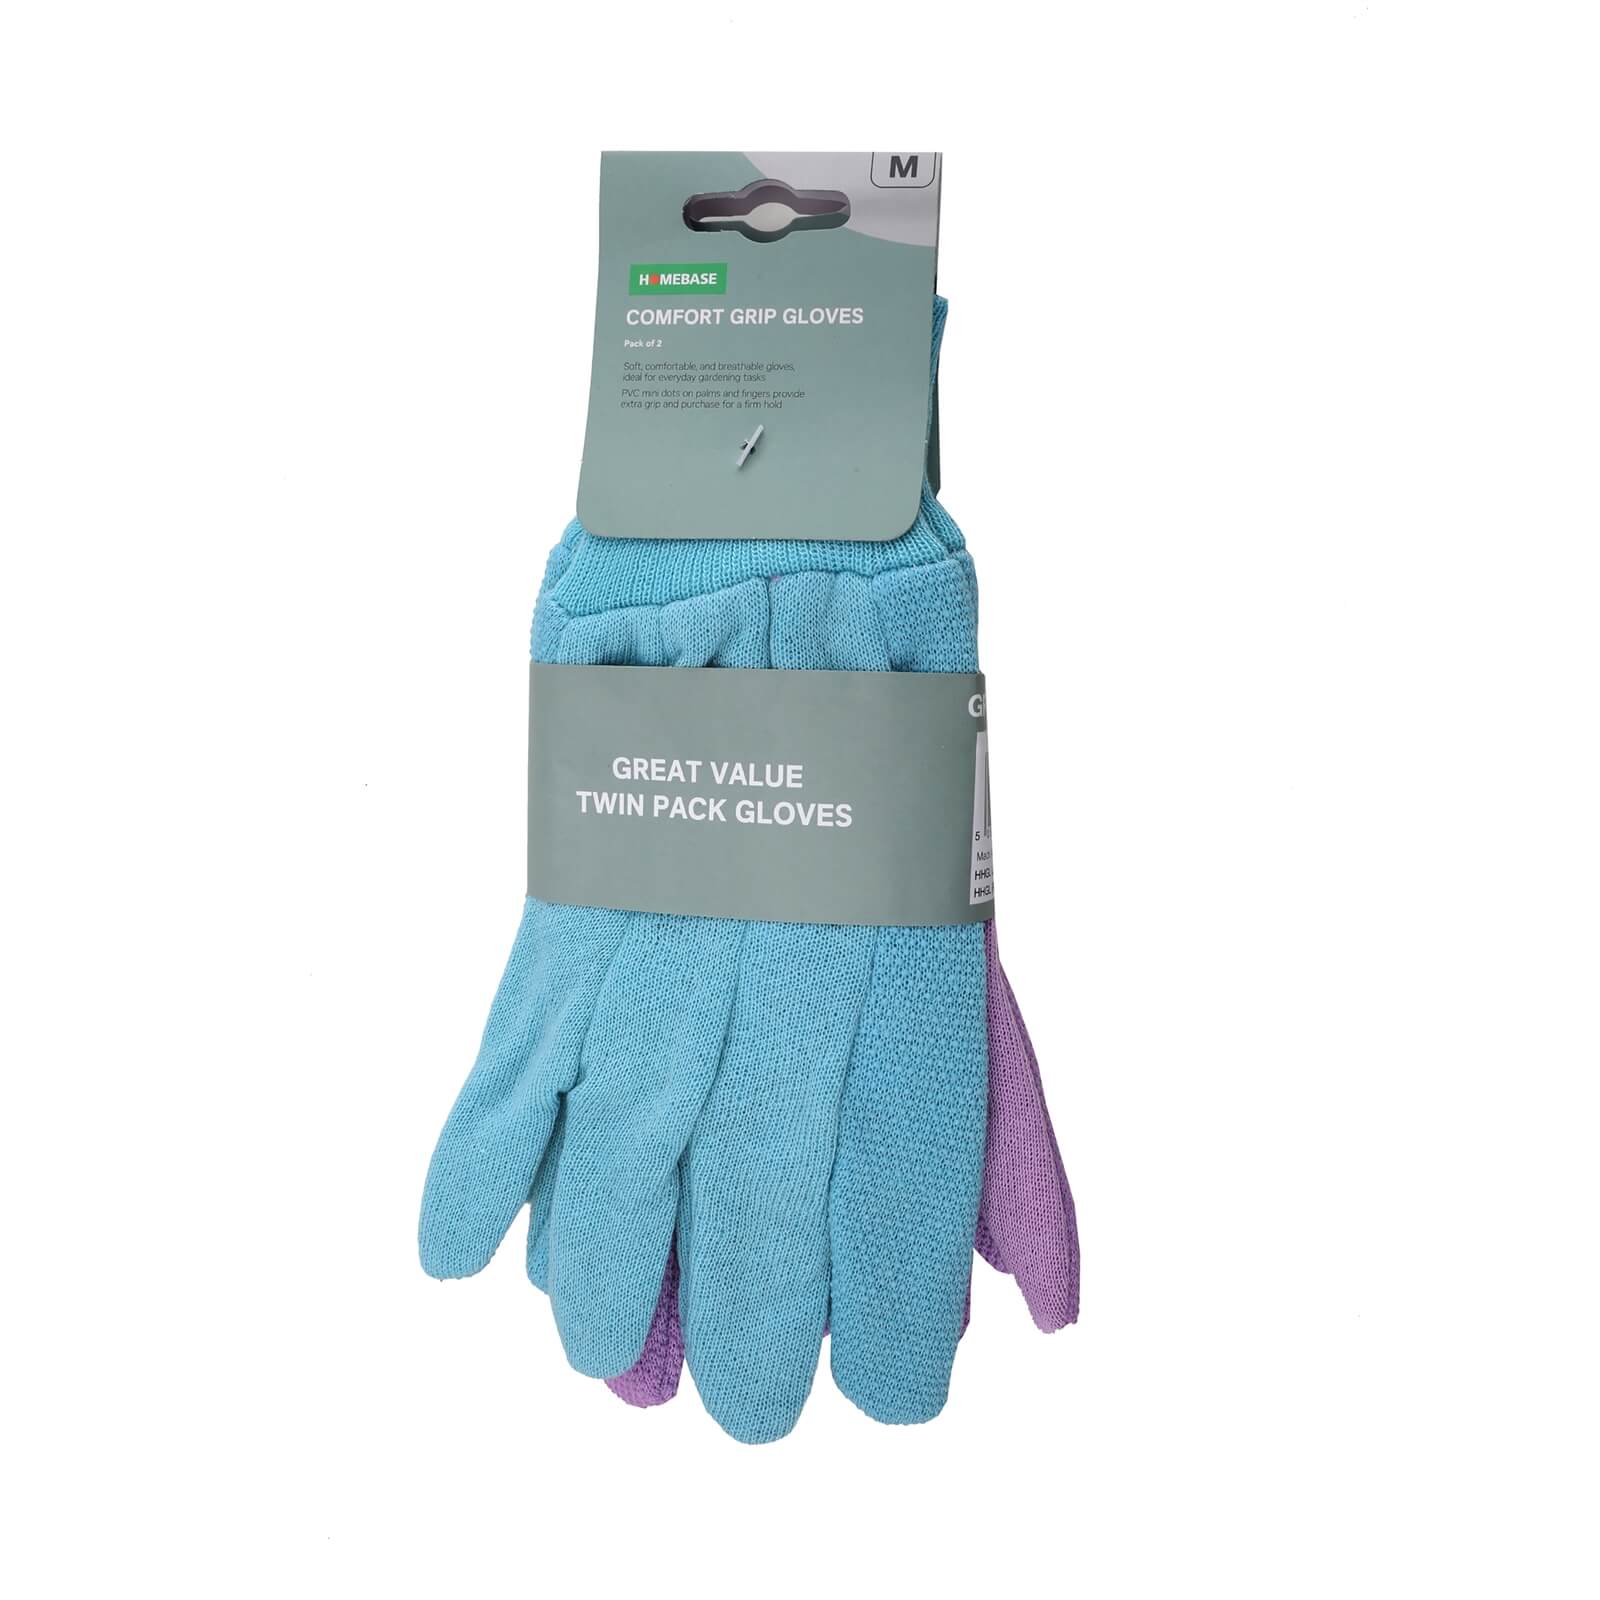 Homebase Comfy Grip Gloves - 2 Pack - Medium